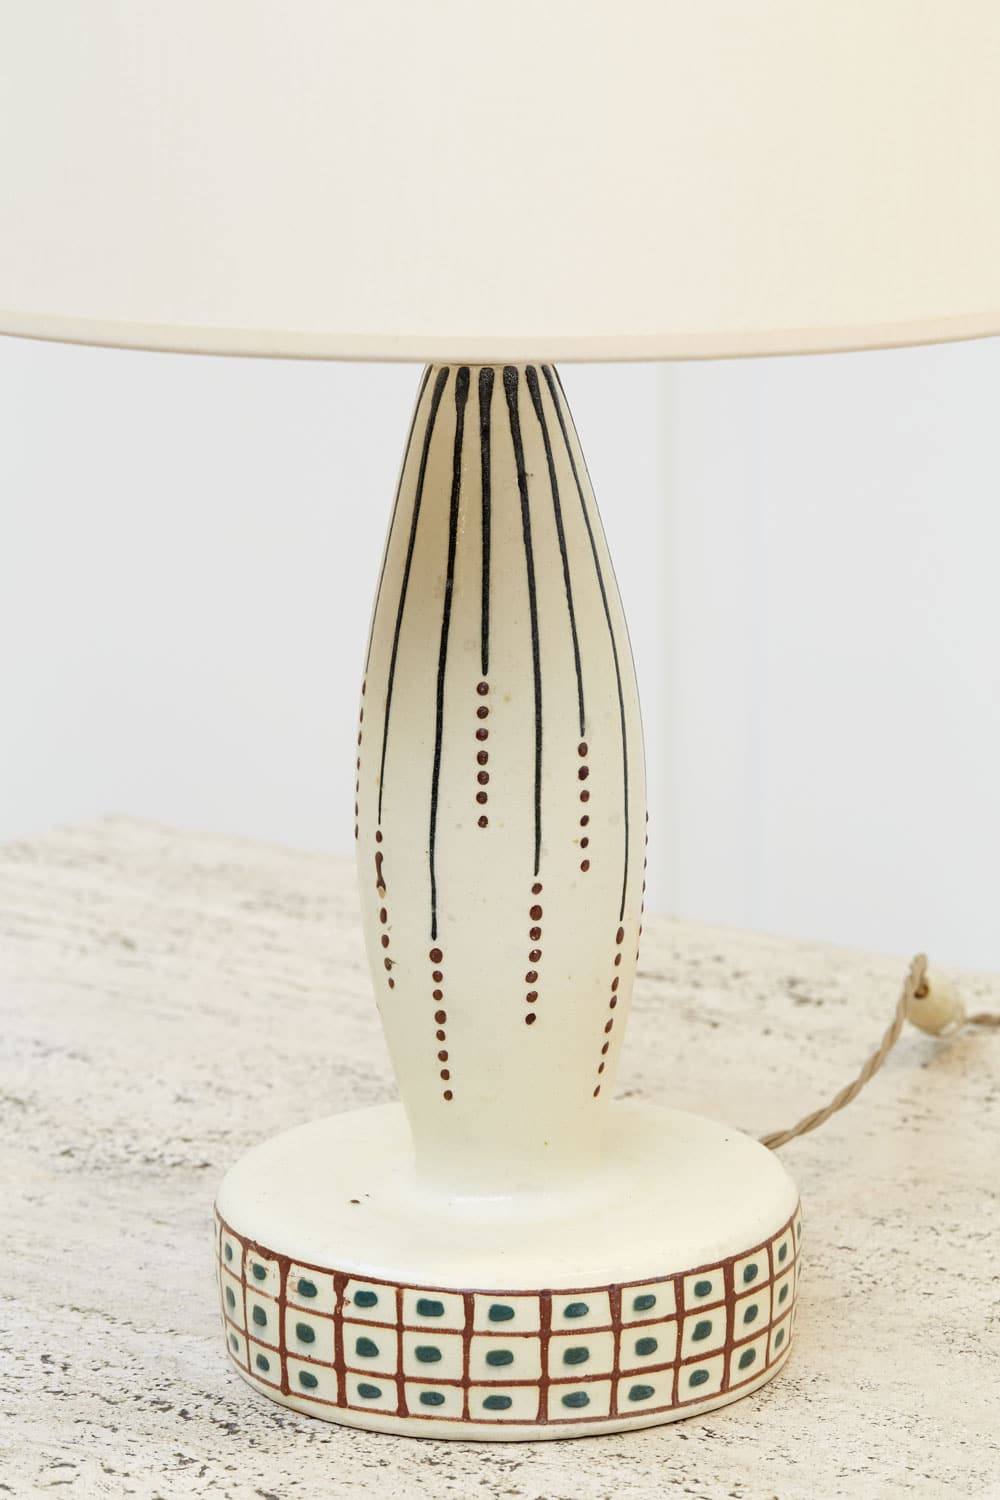 Francis Jourdain, Ceramic lamp, vue 01